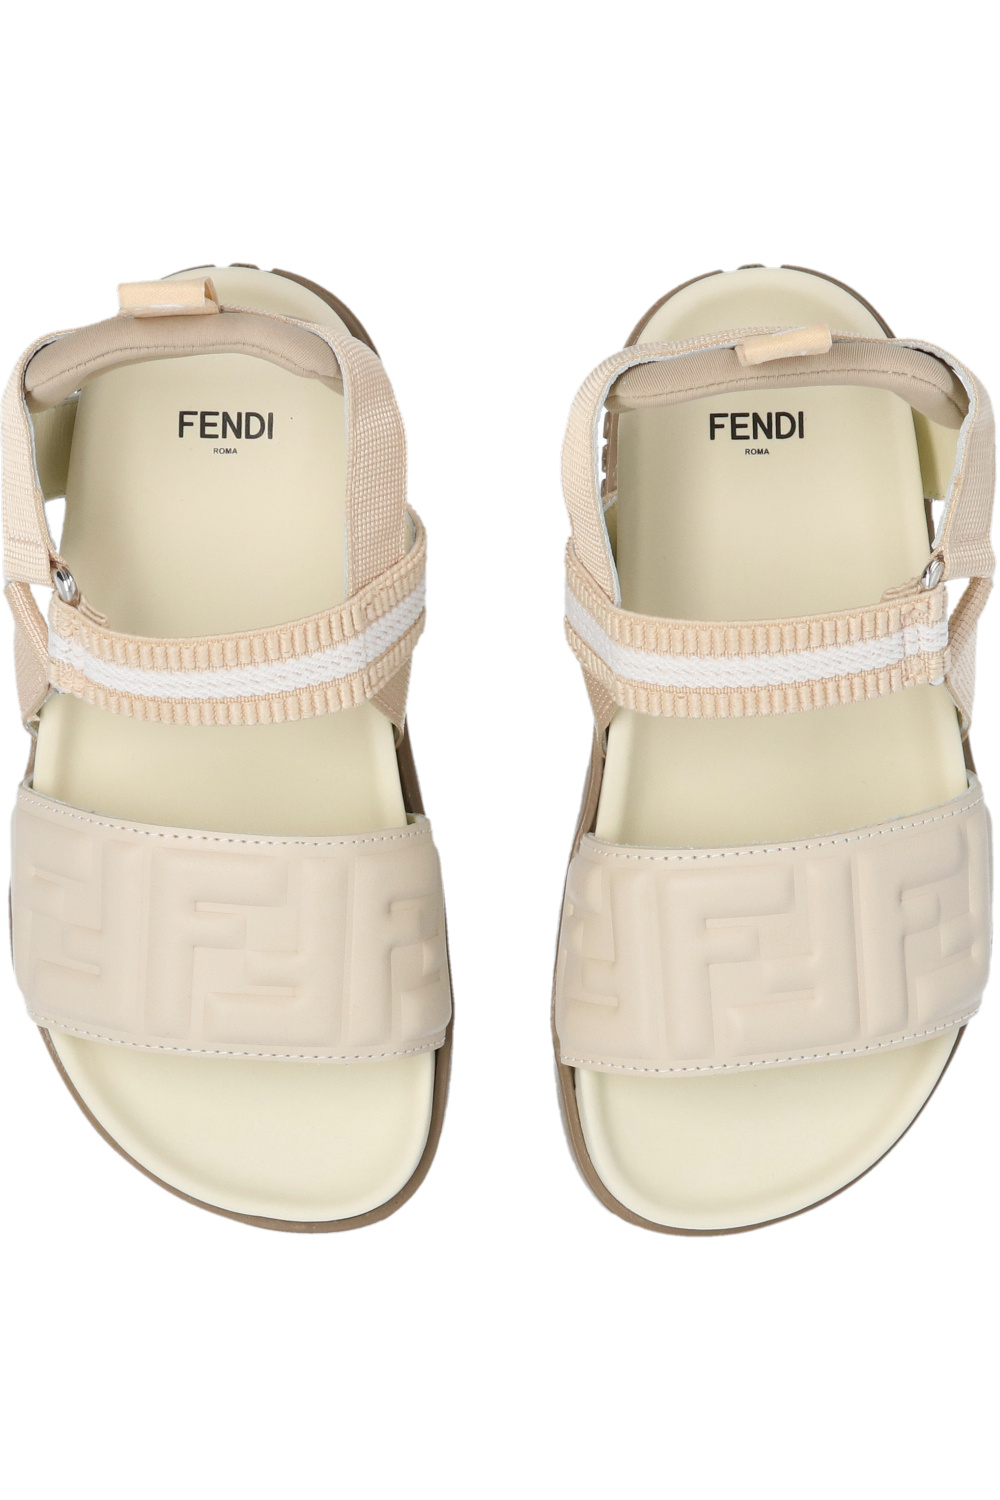 Fendi Kids fendi logo track jacket